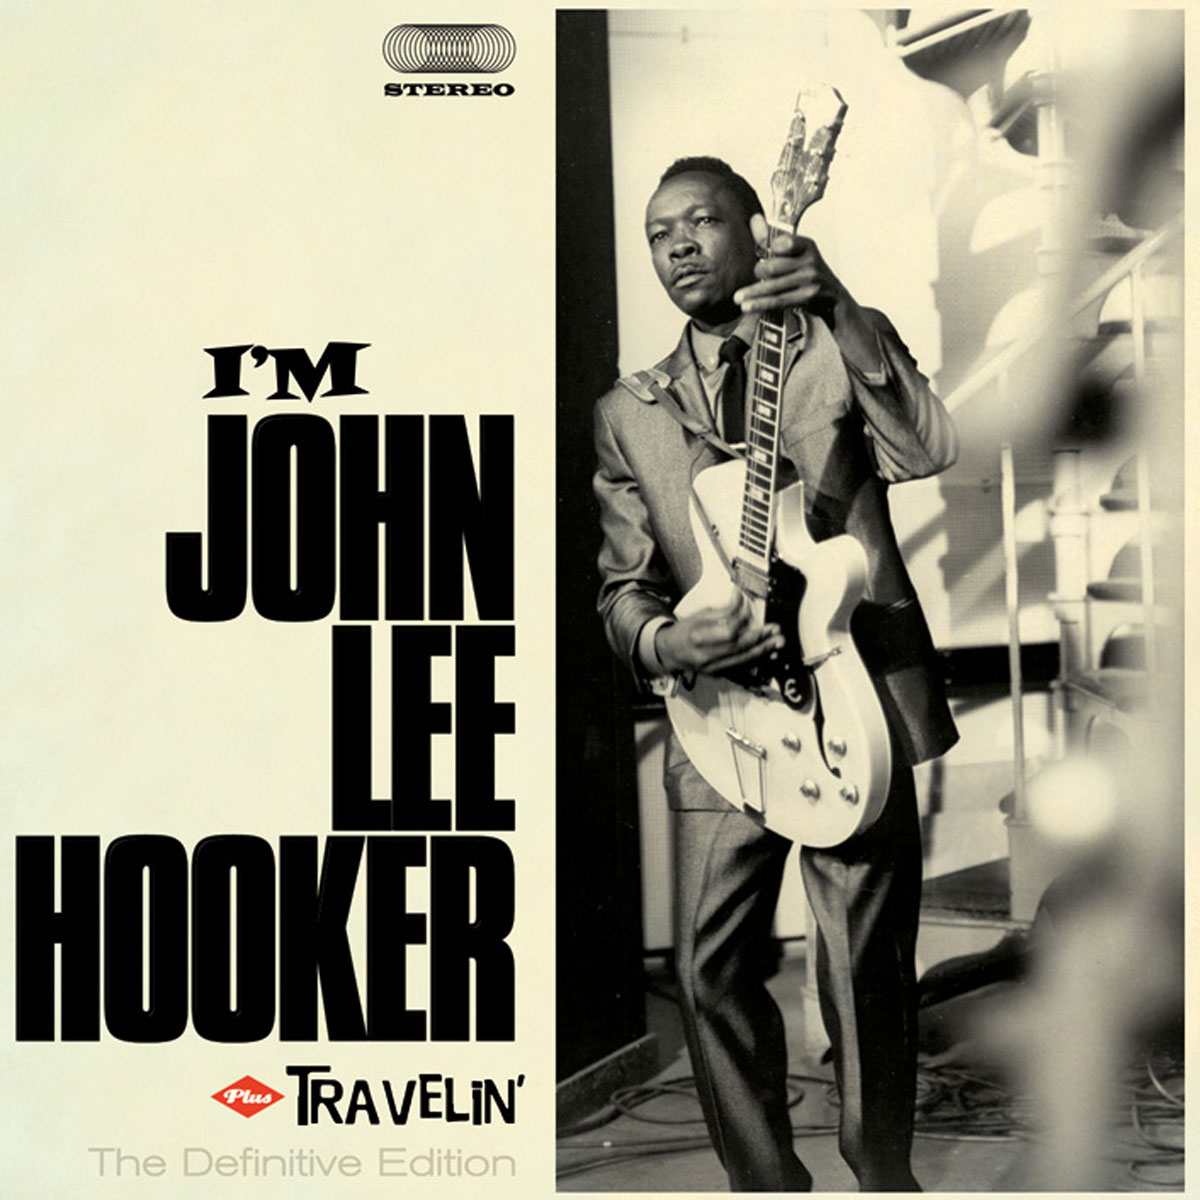 I'm John Lee Hooker + Travelin'